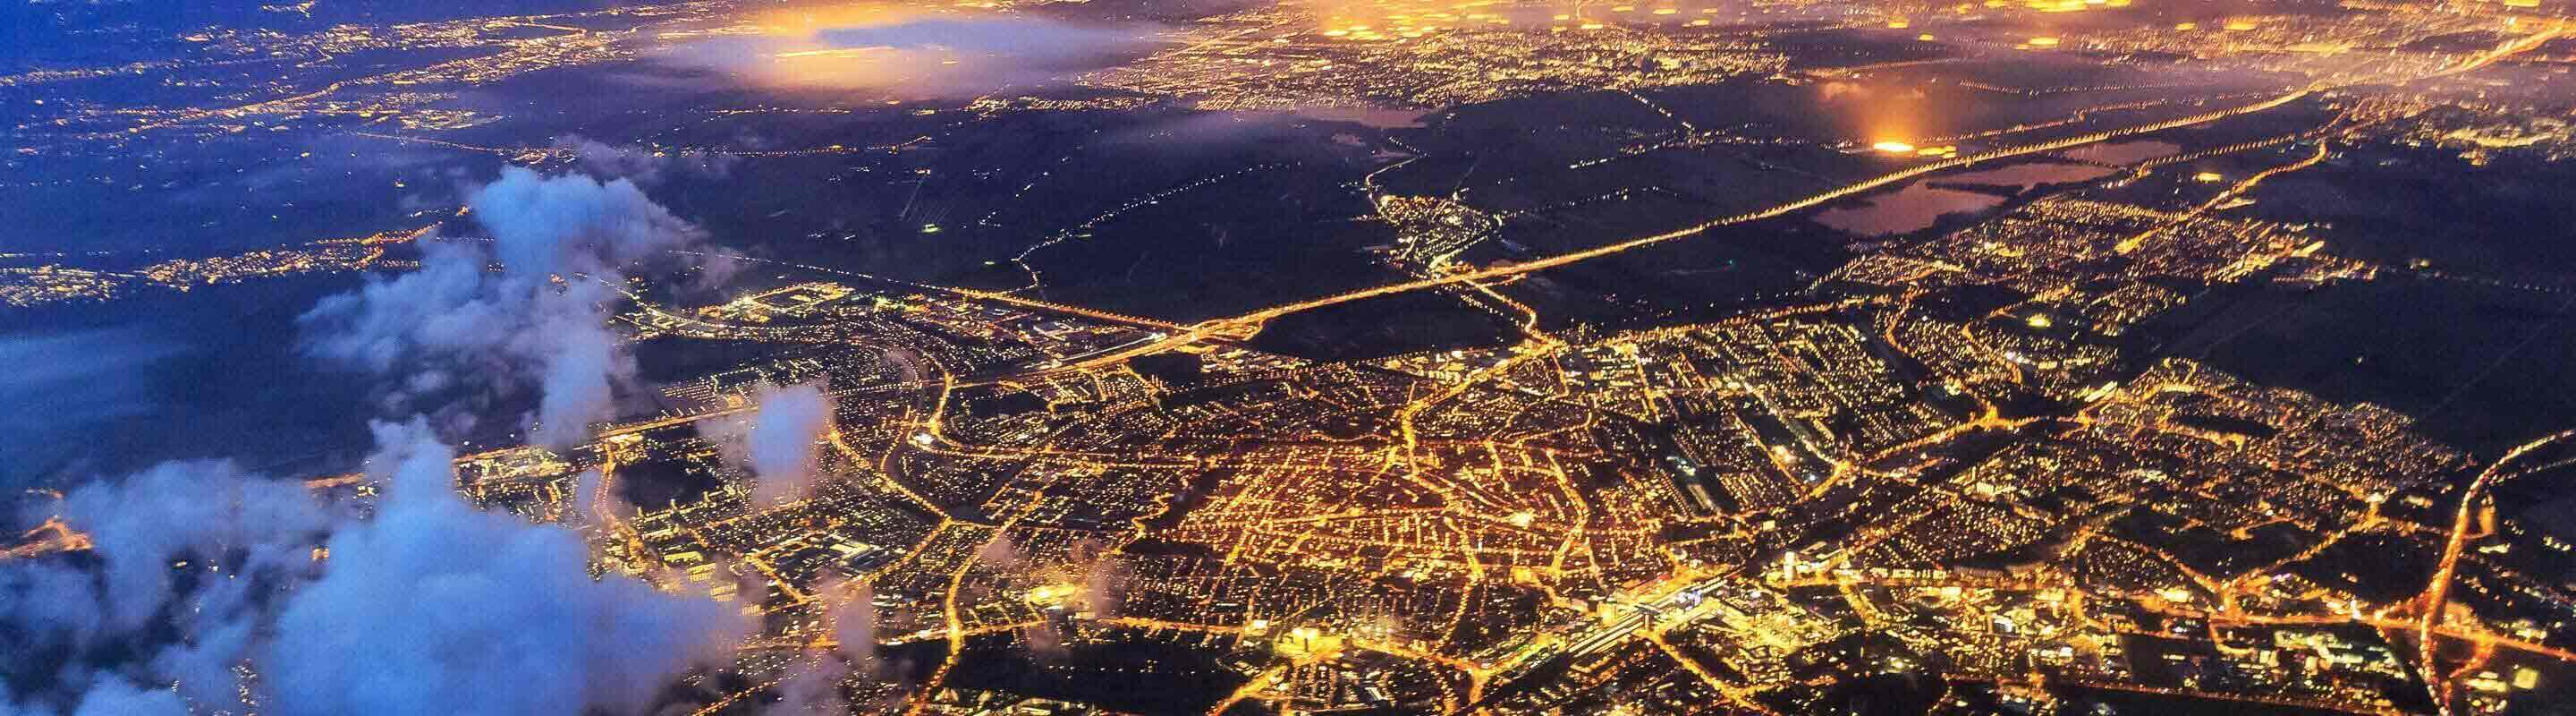 nighttime city